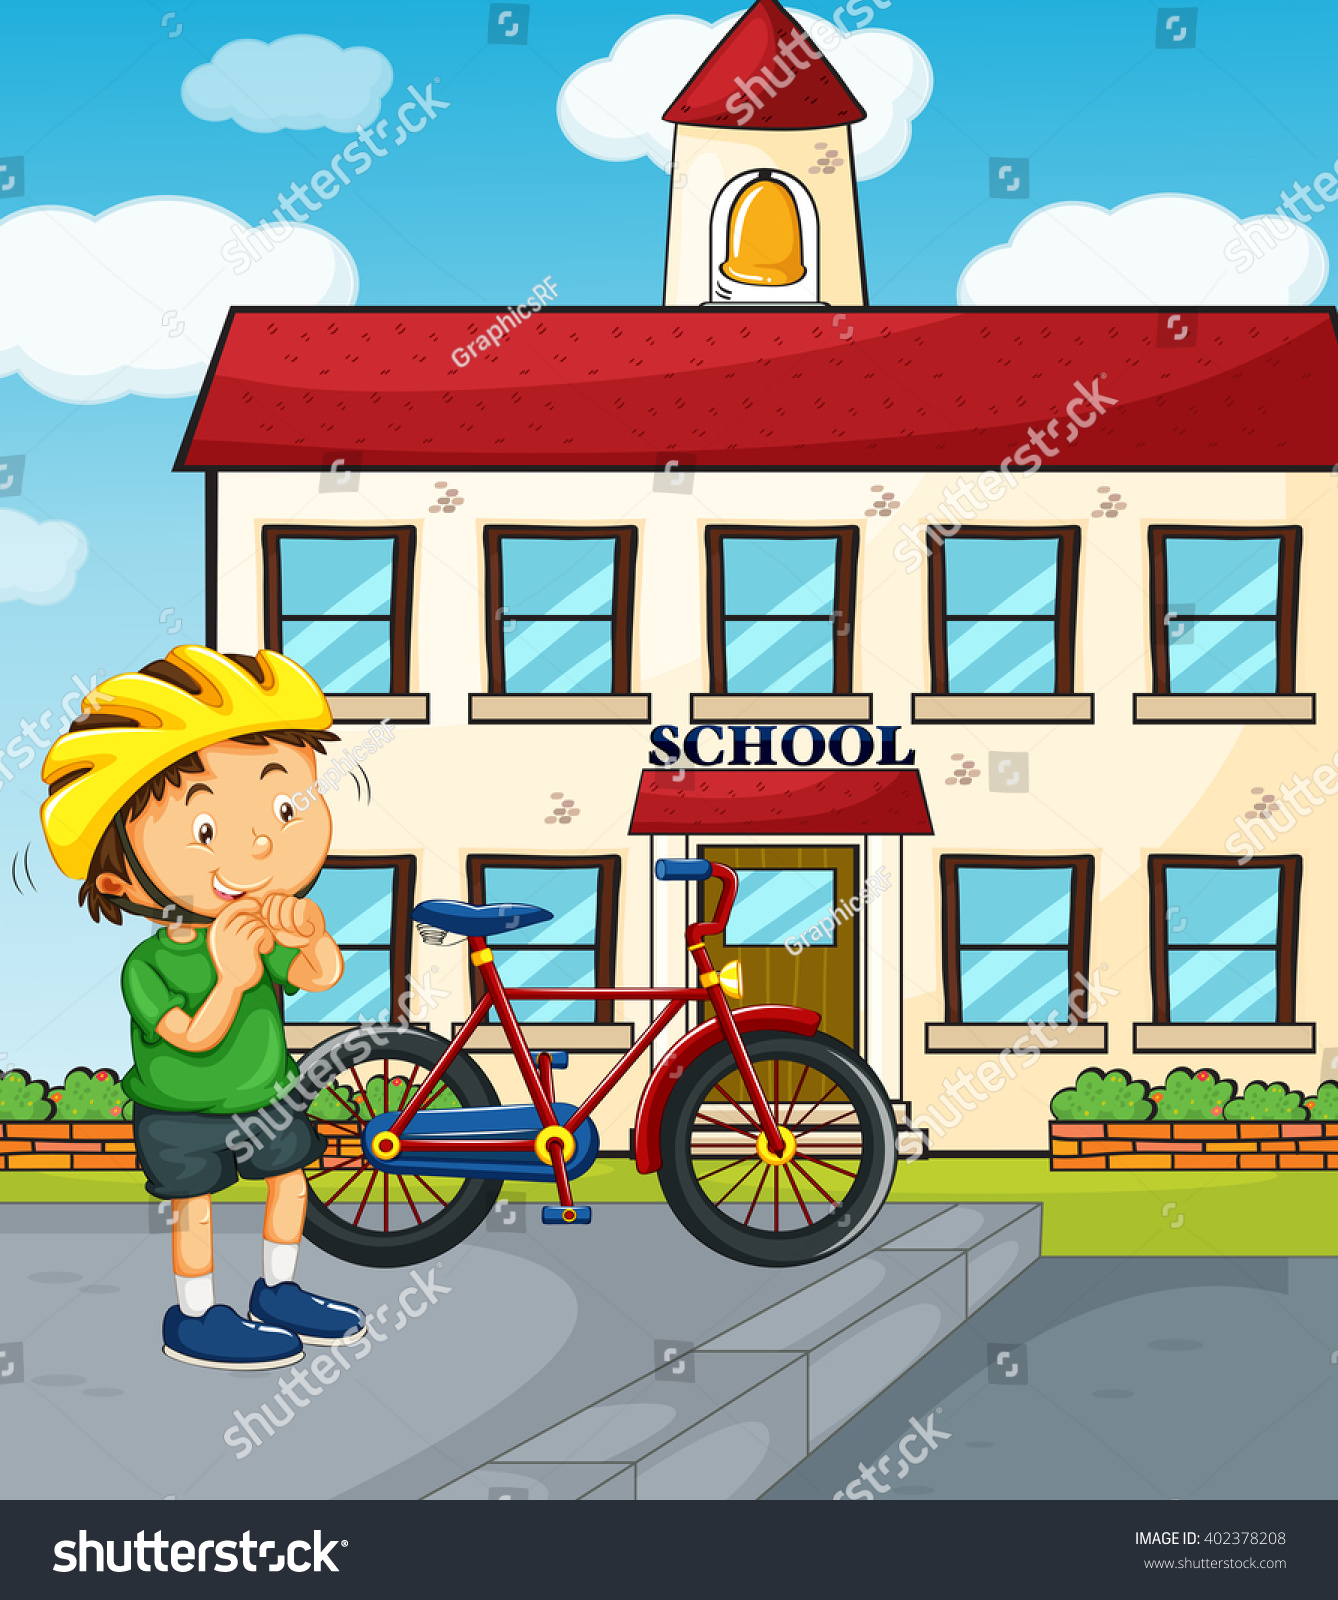 School Scene Boy Bike Illustration Stock Vector 402378208 - Shutterstock